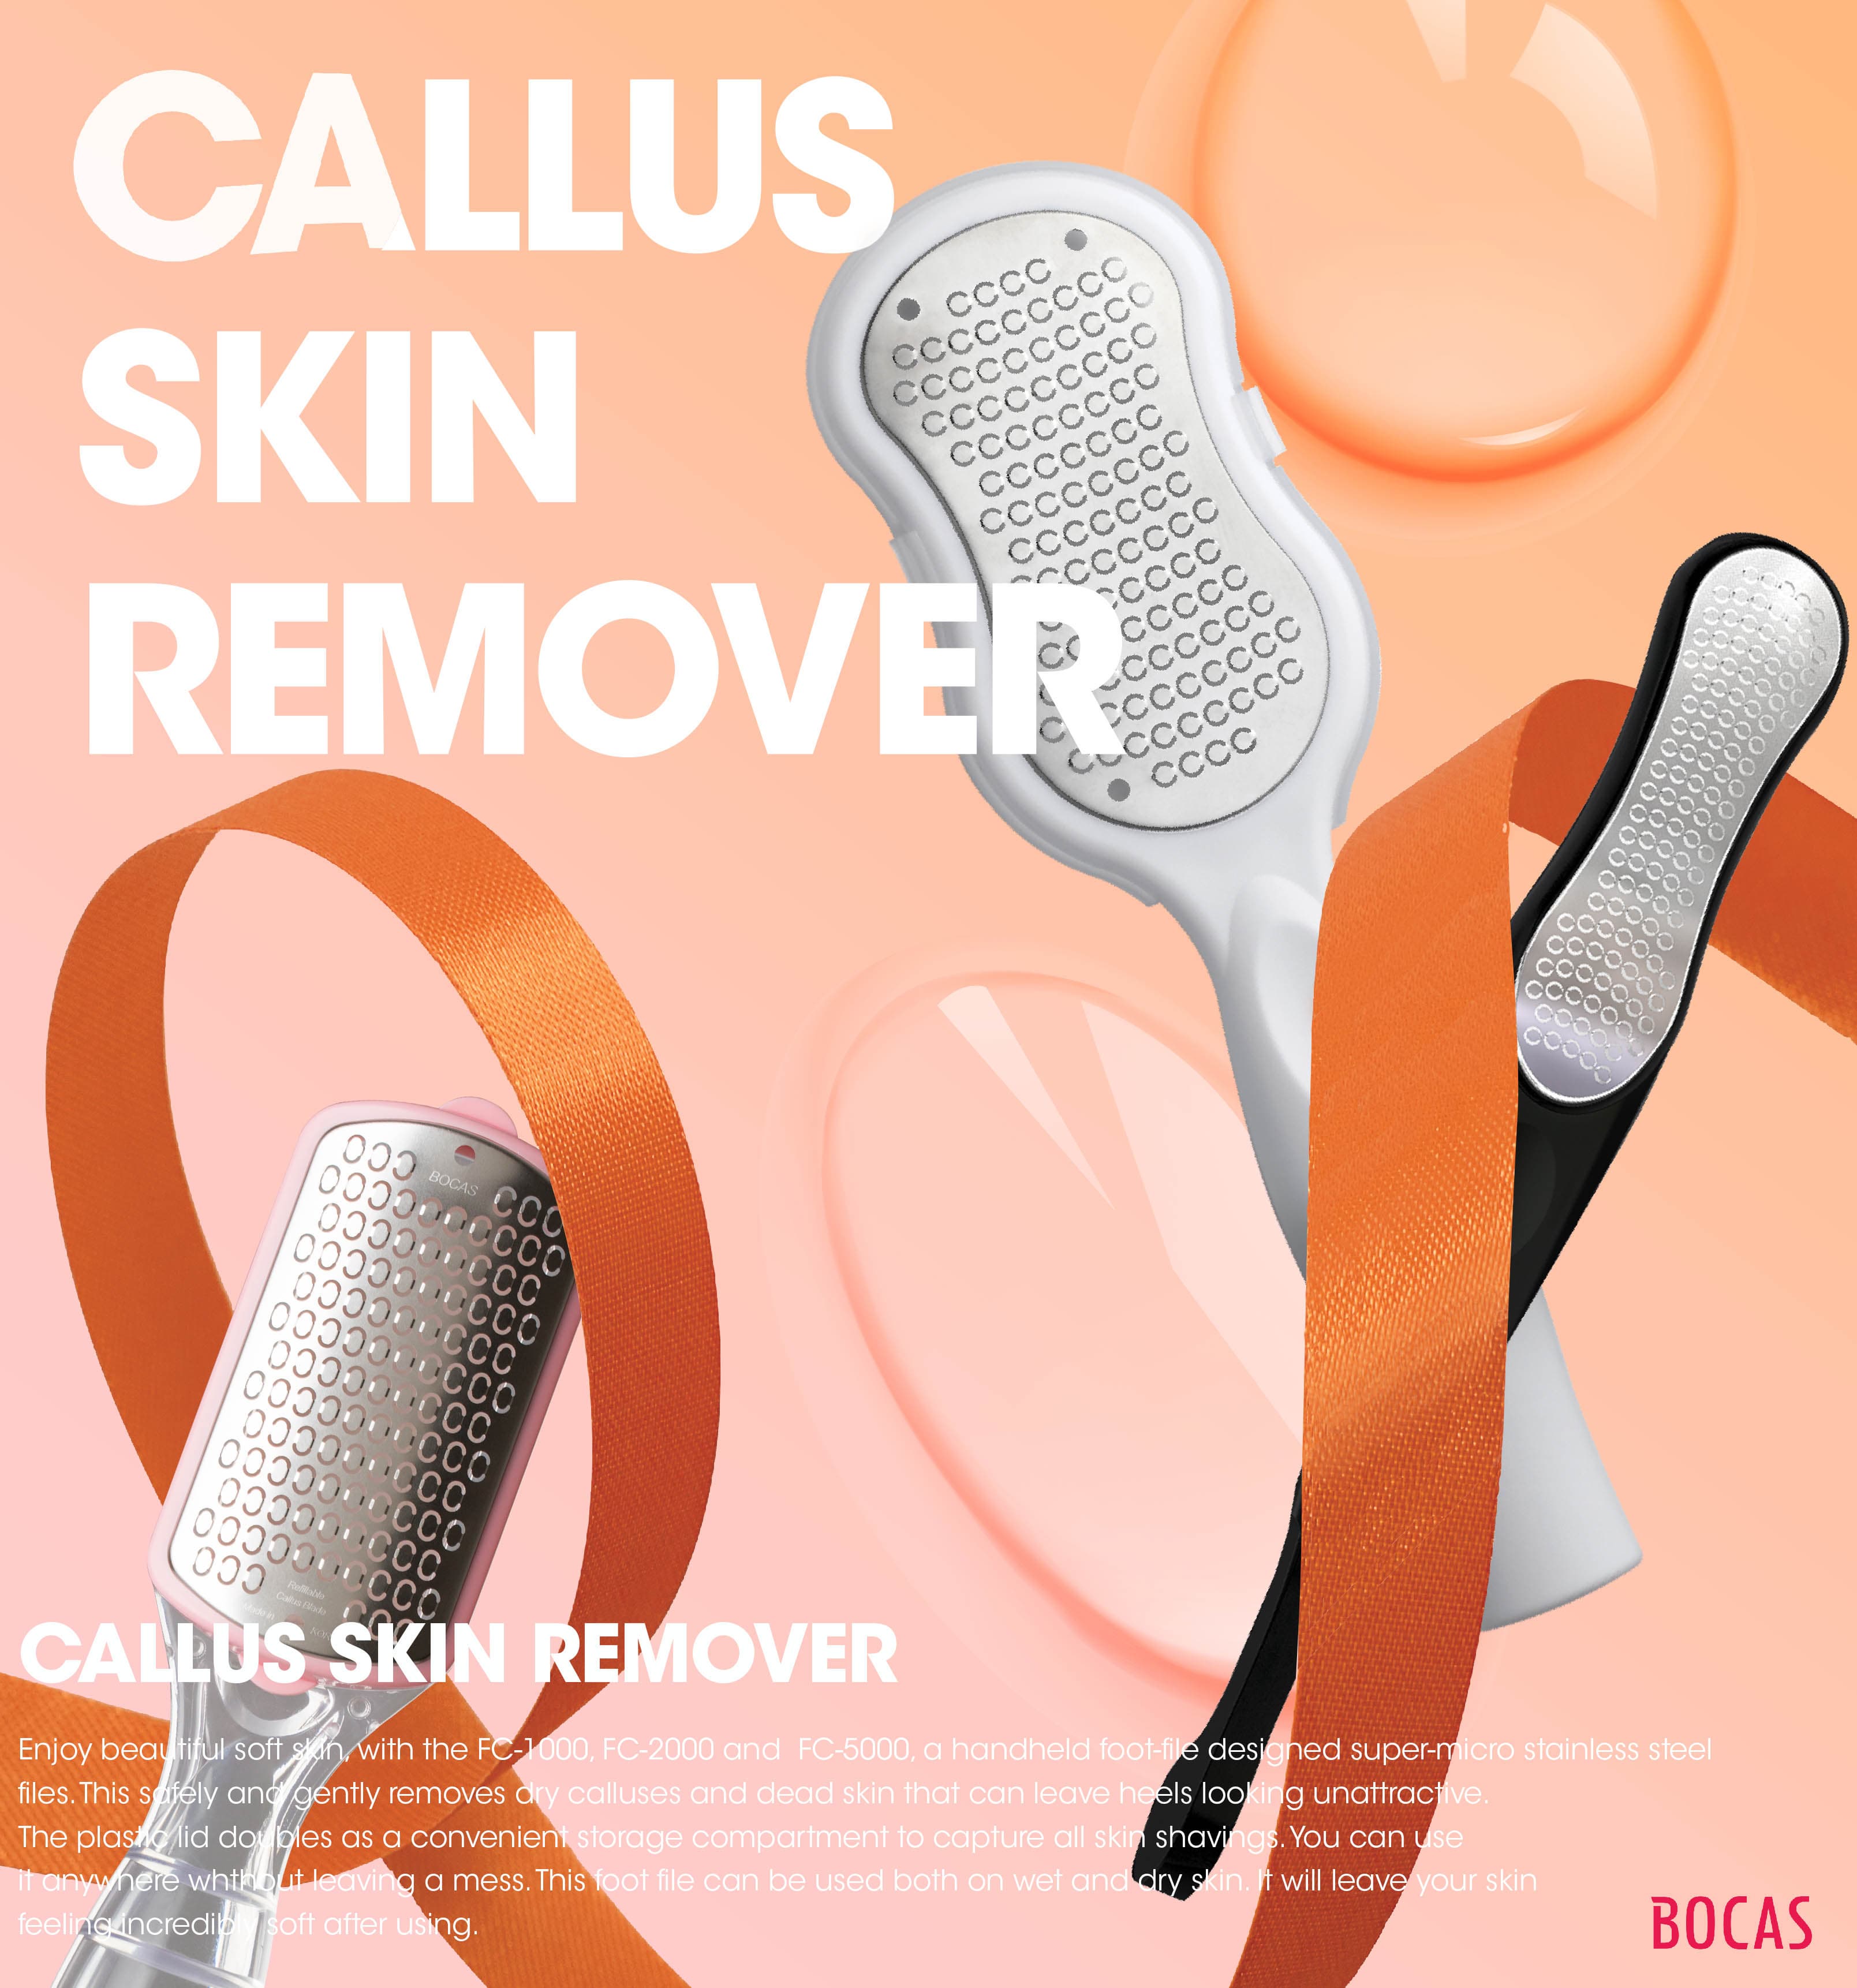 callus skin remover_ foot cleaner